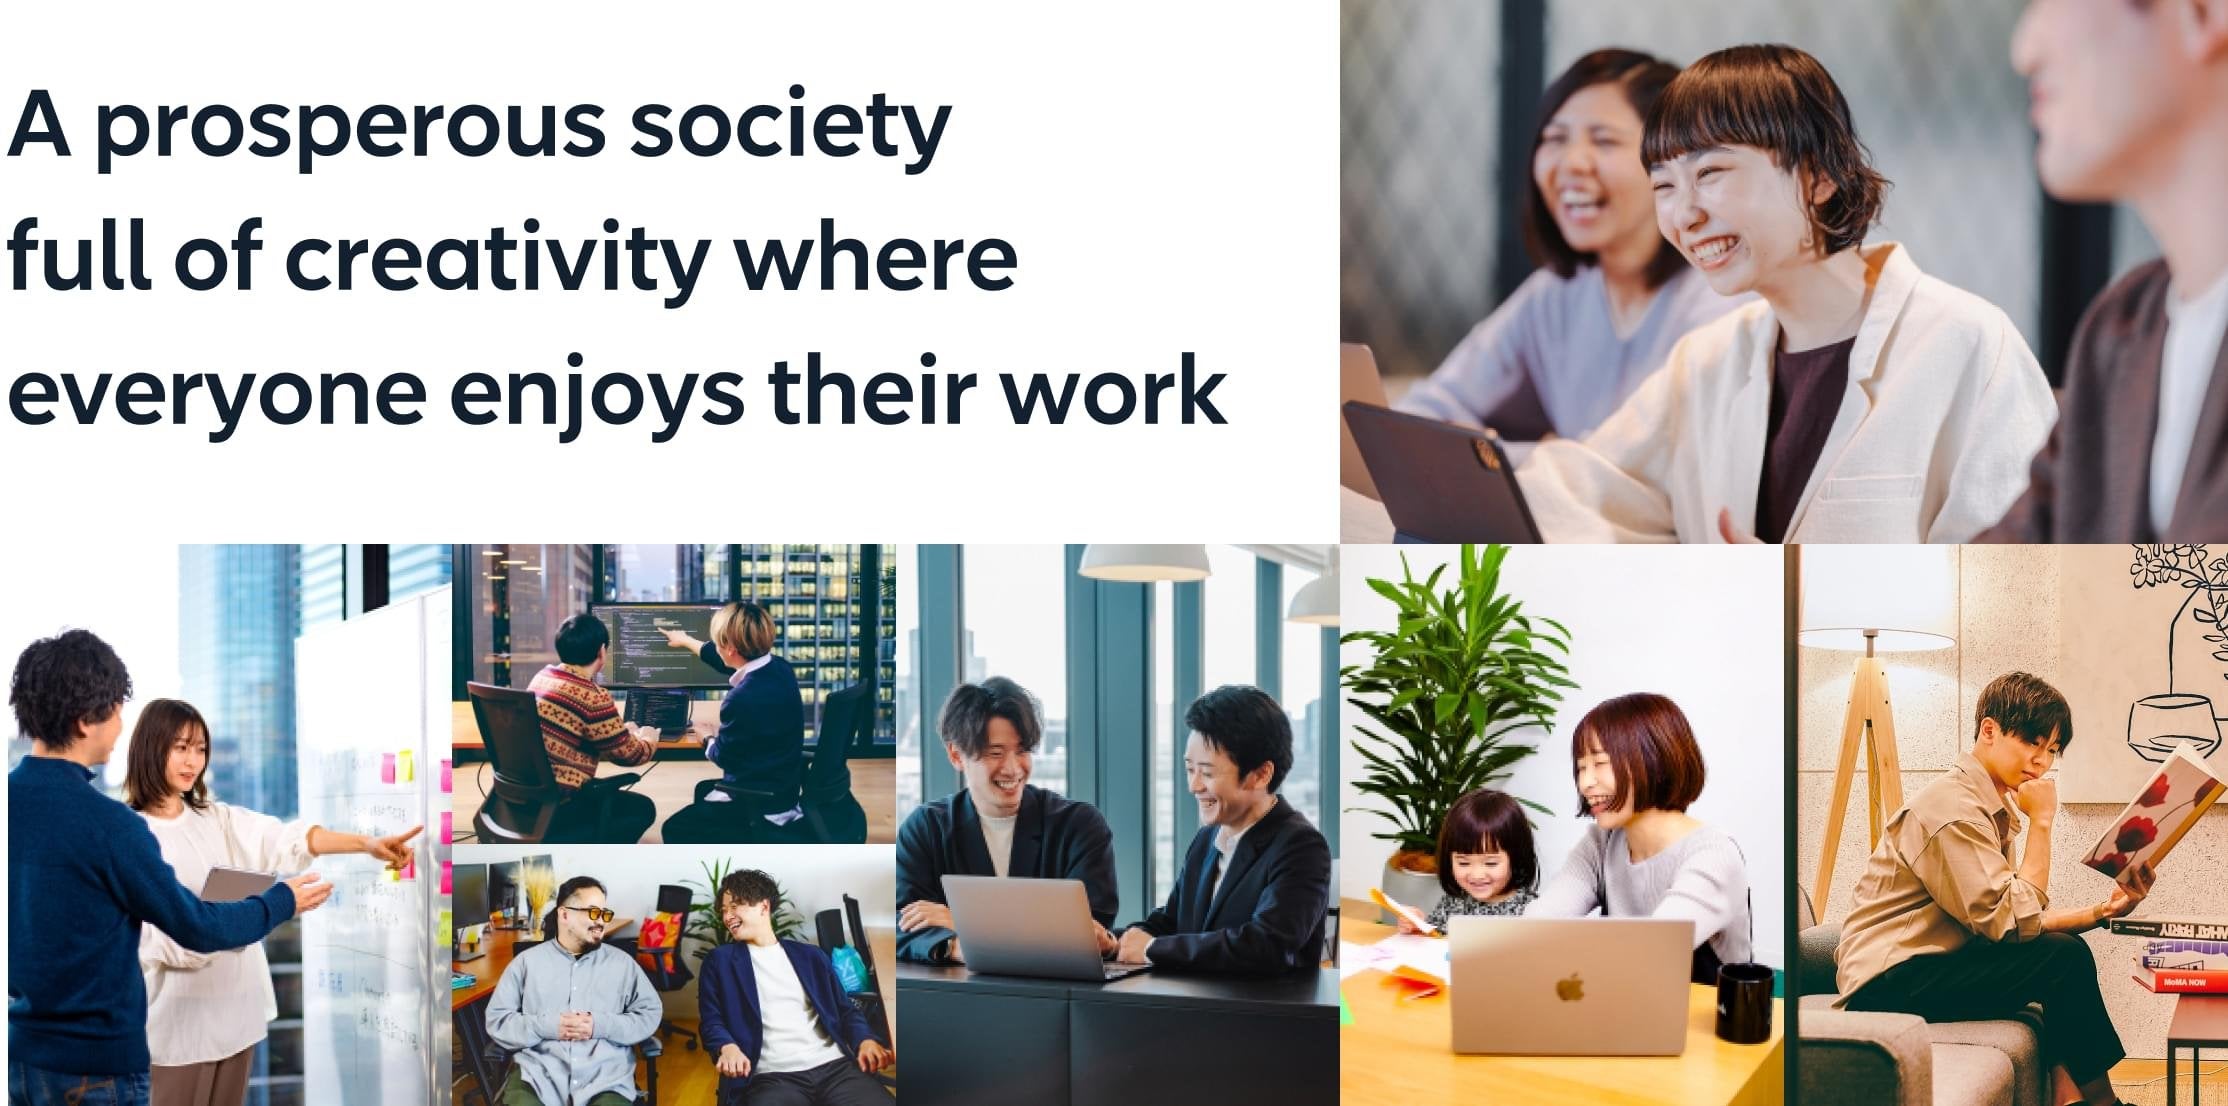 A prosperous society full of creativity where everyone enjoys their work